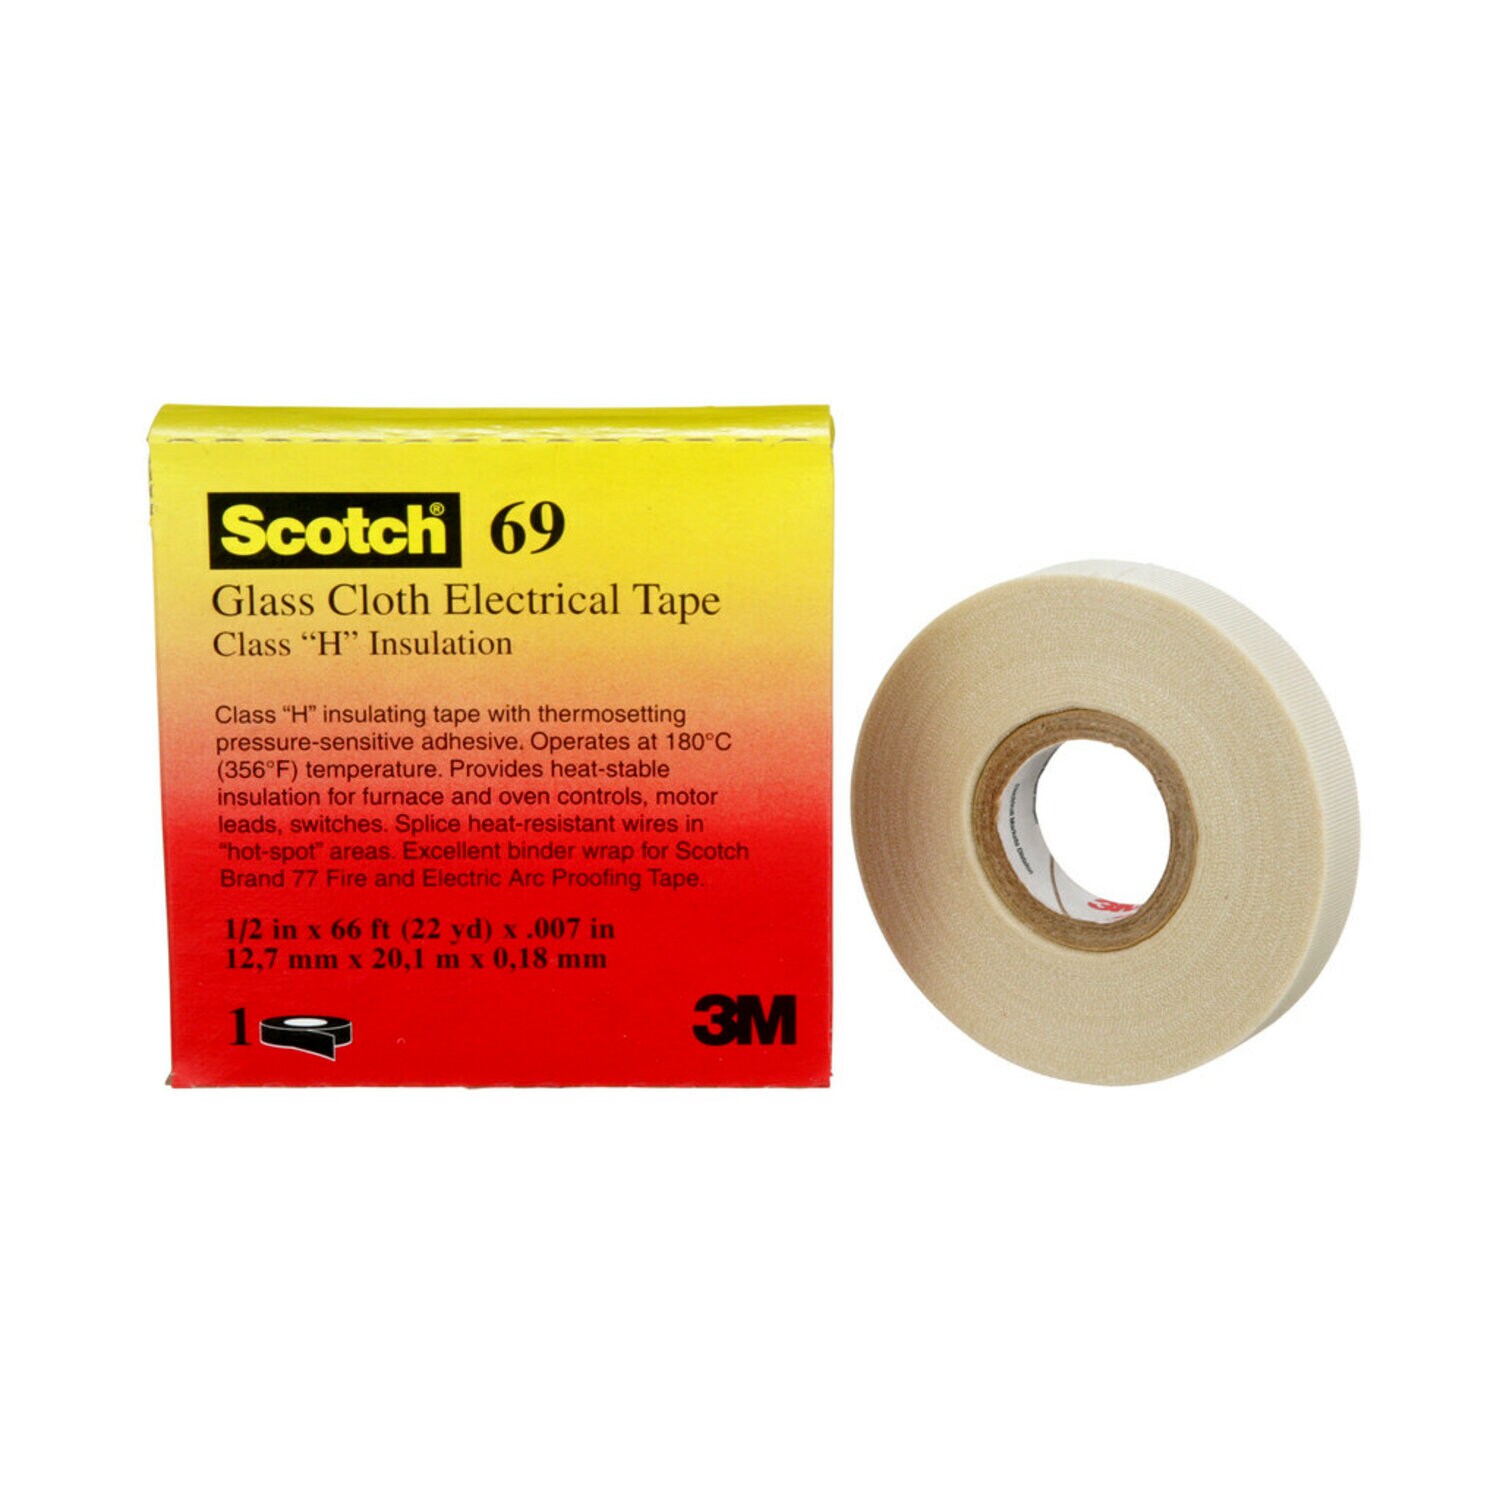 Pack-n-Tape  3M 262 Bondo Body Filler, 1 Qt (28 oz), 12 per case -  Pack-n-Tape